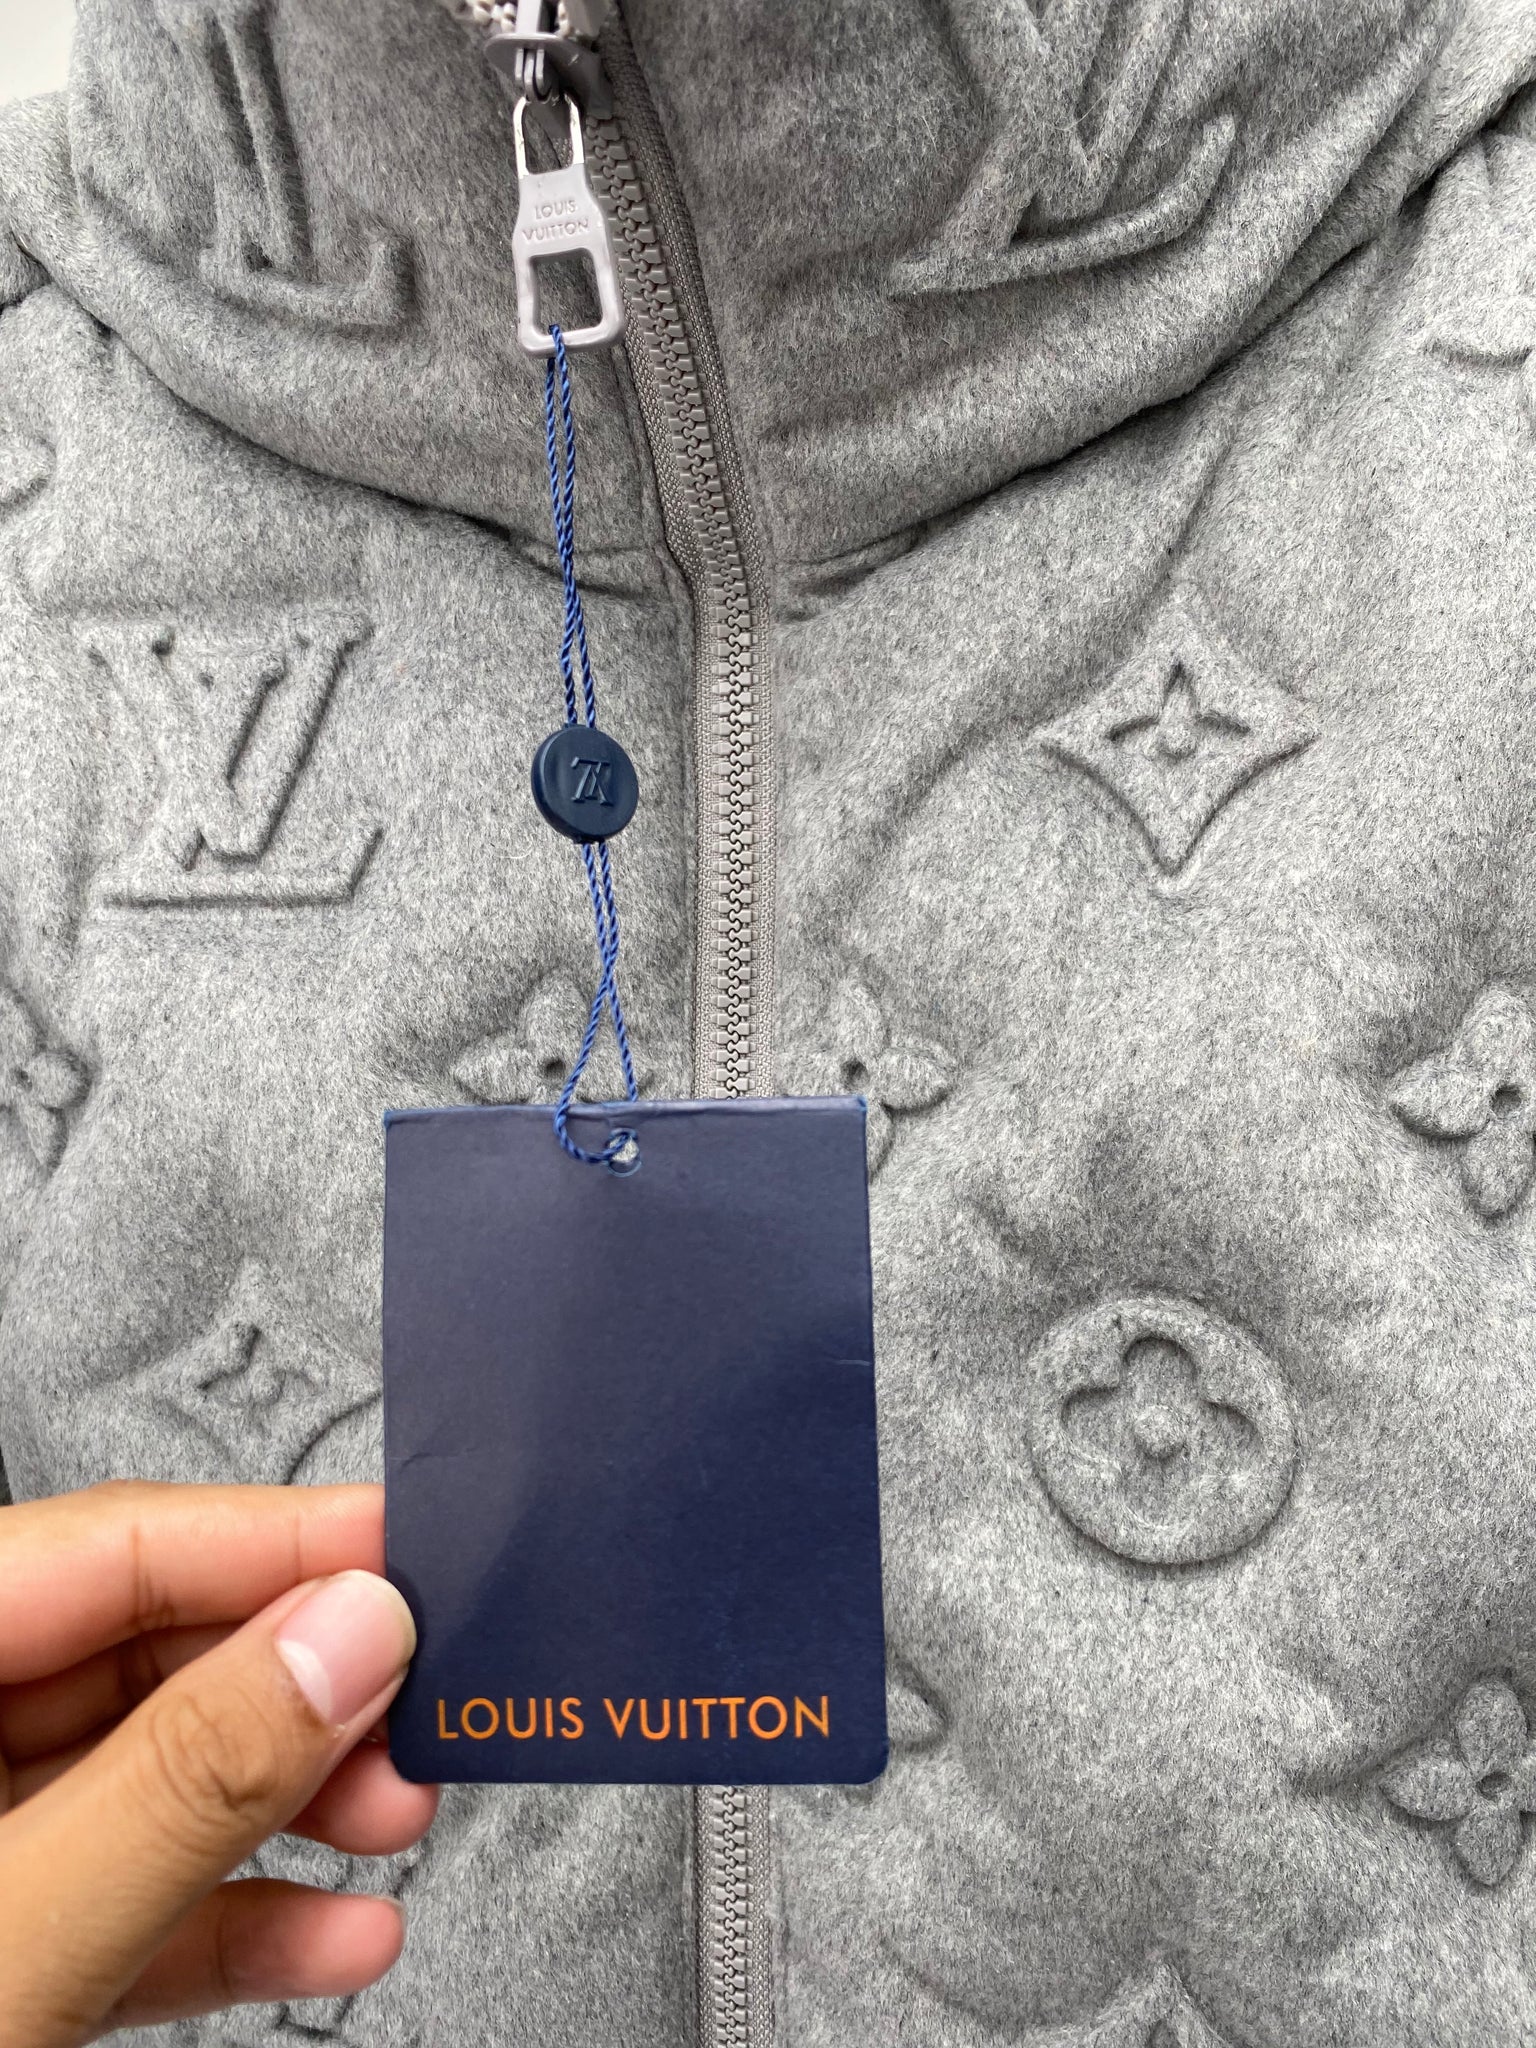 Louis Vuitton RARE RUNWAY SAMPLE! AW19 Boyhood Monogram grey puffer